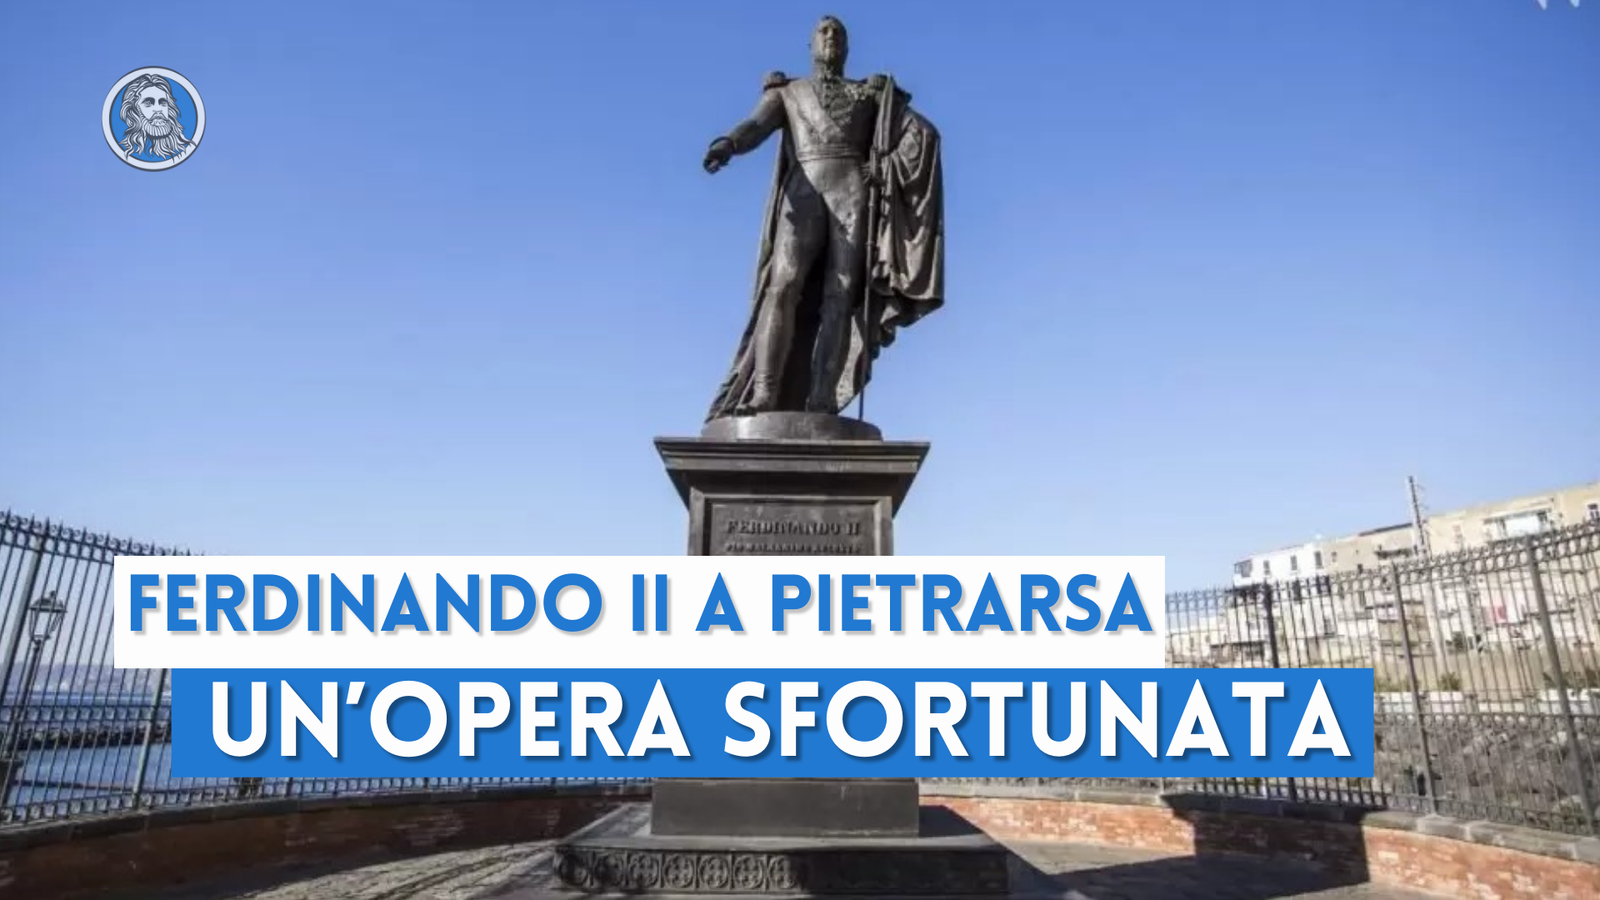 La statua di Ferdinando II a Pietrarsa, una sfortunata opera d'arte